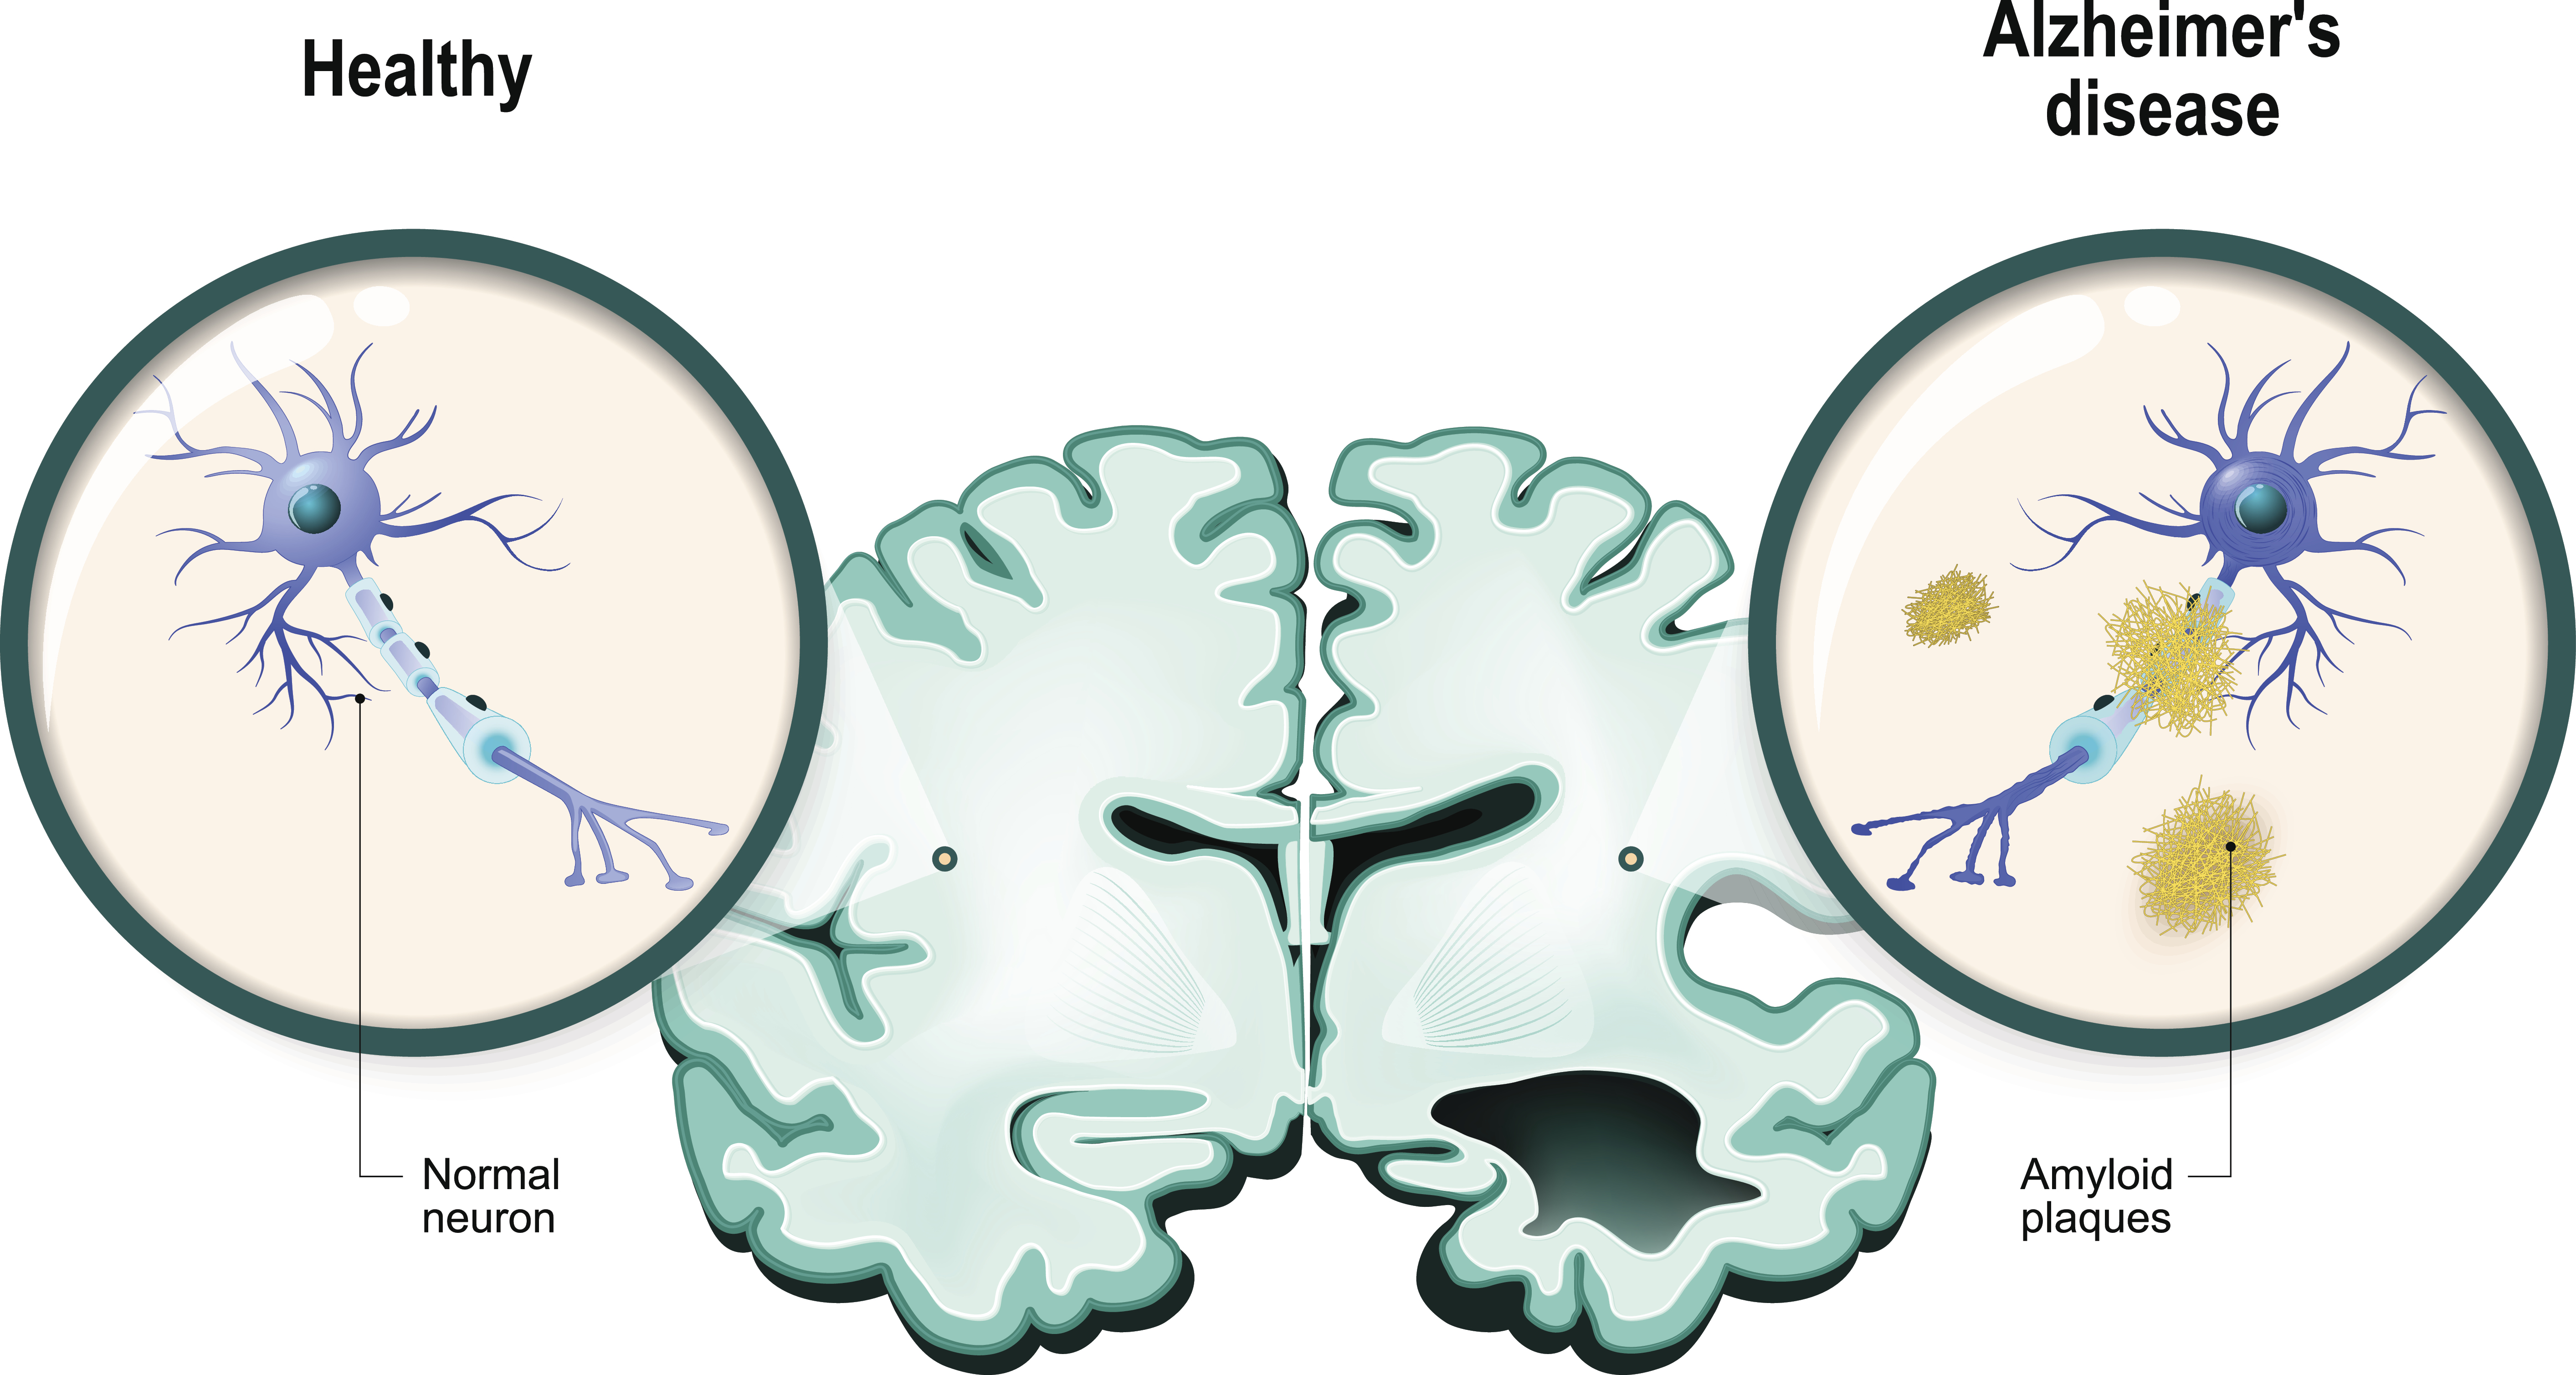 Medical Illustration of brain and neurons: Healthy vs. Alzheimer's disease